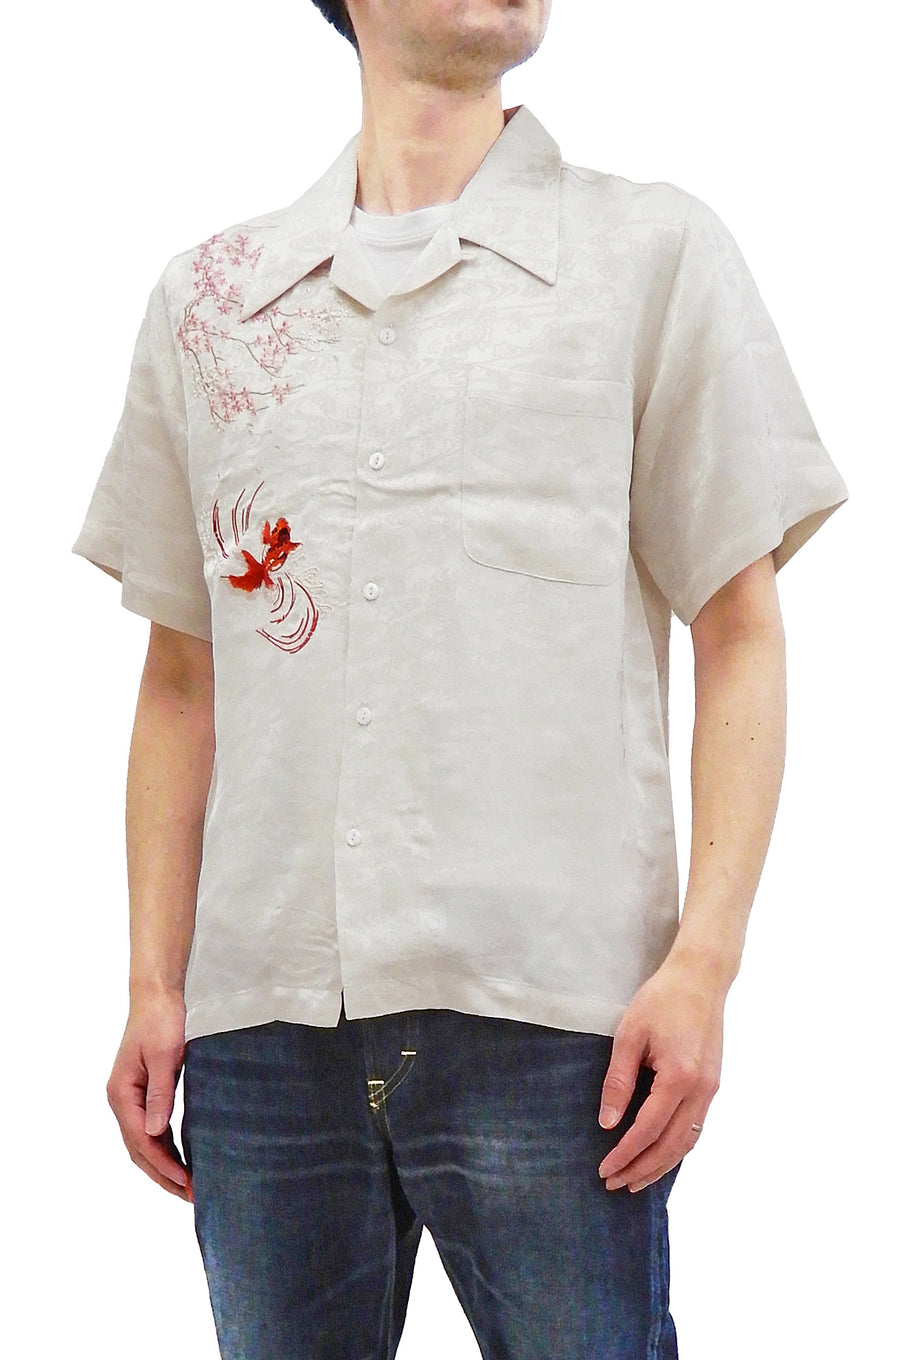 Hanatabi Gakudan Men's S/S Jacquard Shirt with Japanese Art Embroidery SS-002 Off-white